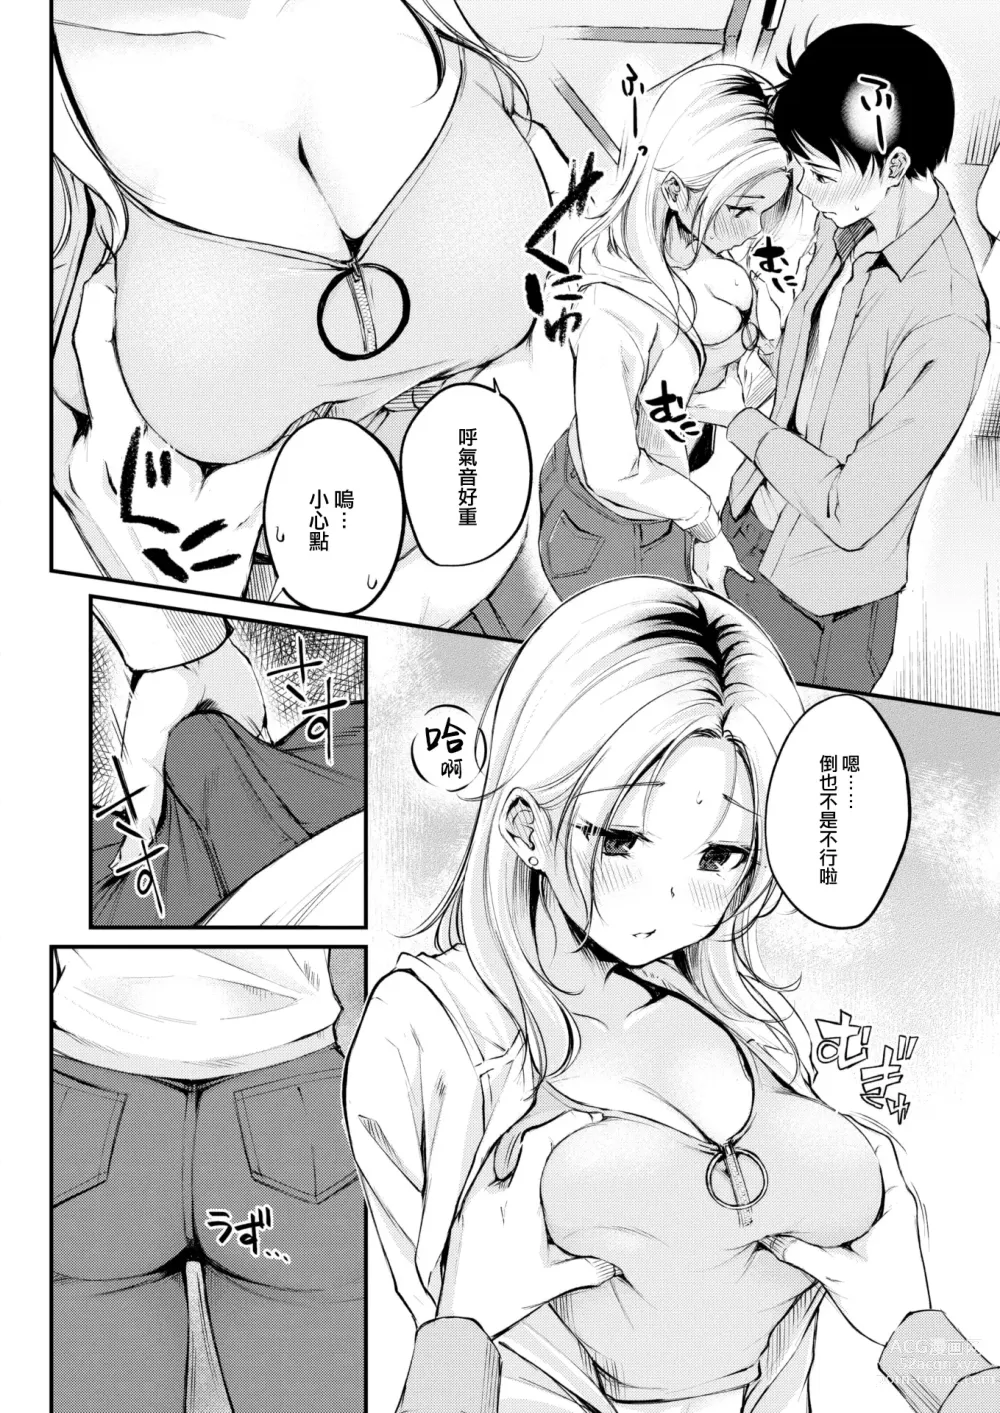 Page 11 of manga Senkou Hanabi no Koi